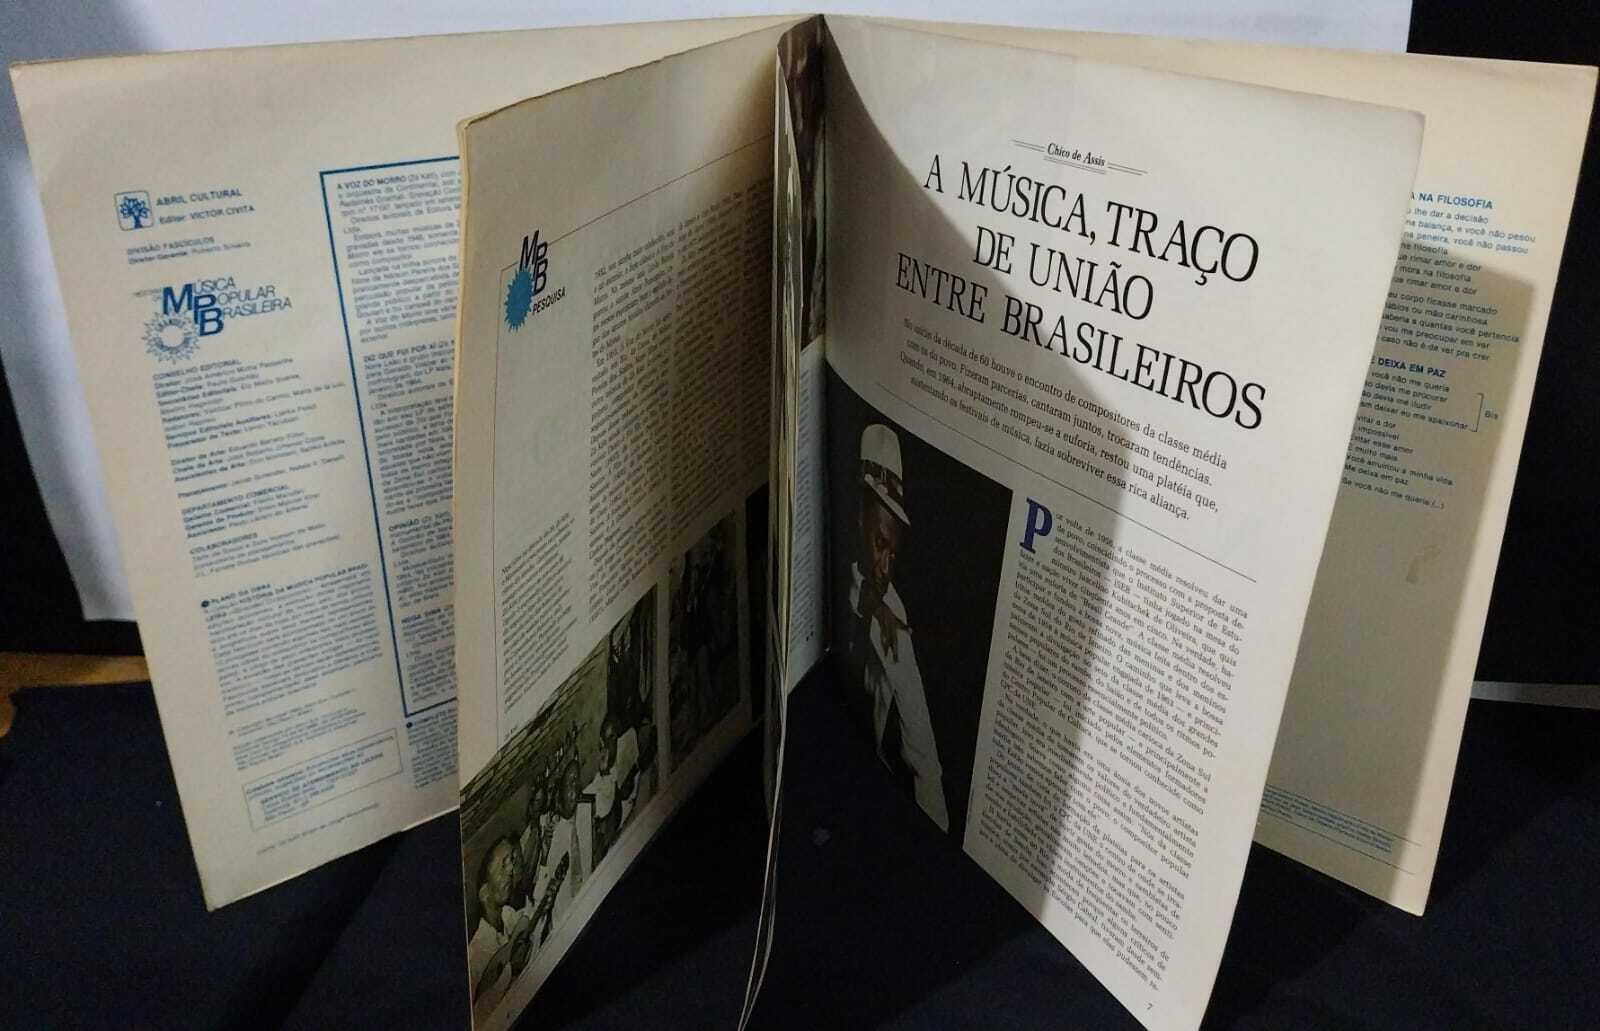 Vinil - Zé Kéti e Monsueto - História da Música Popular Brasileira